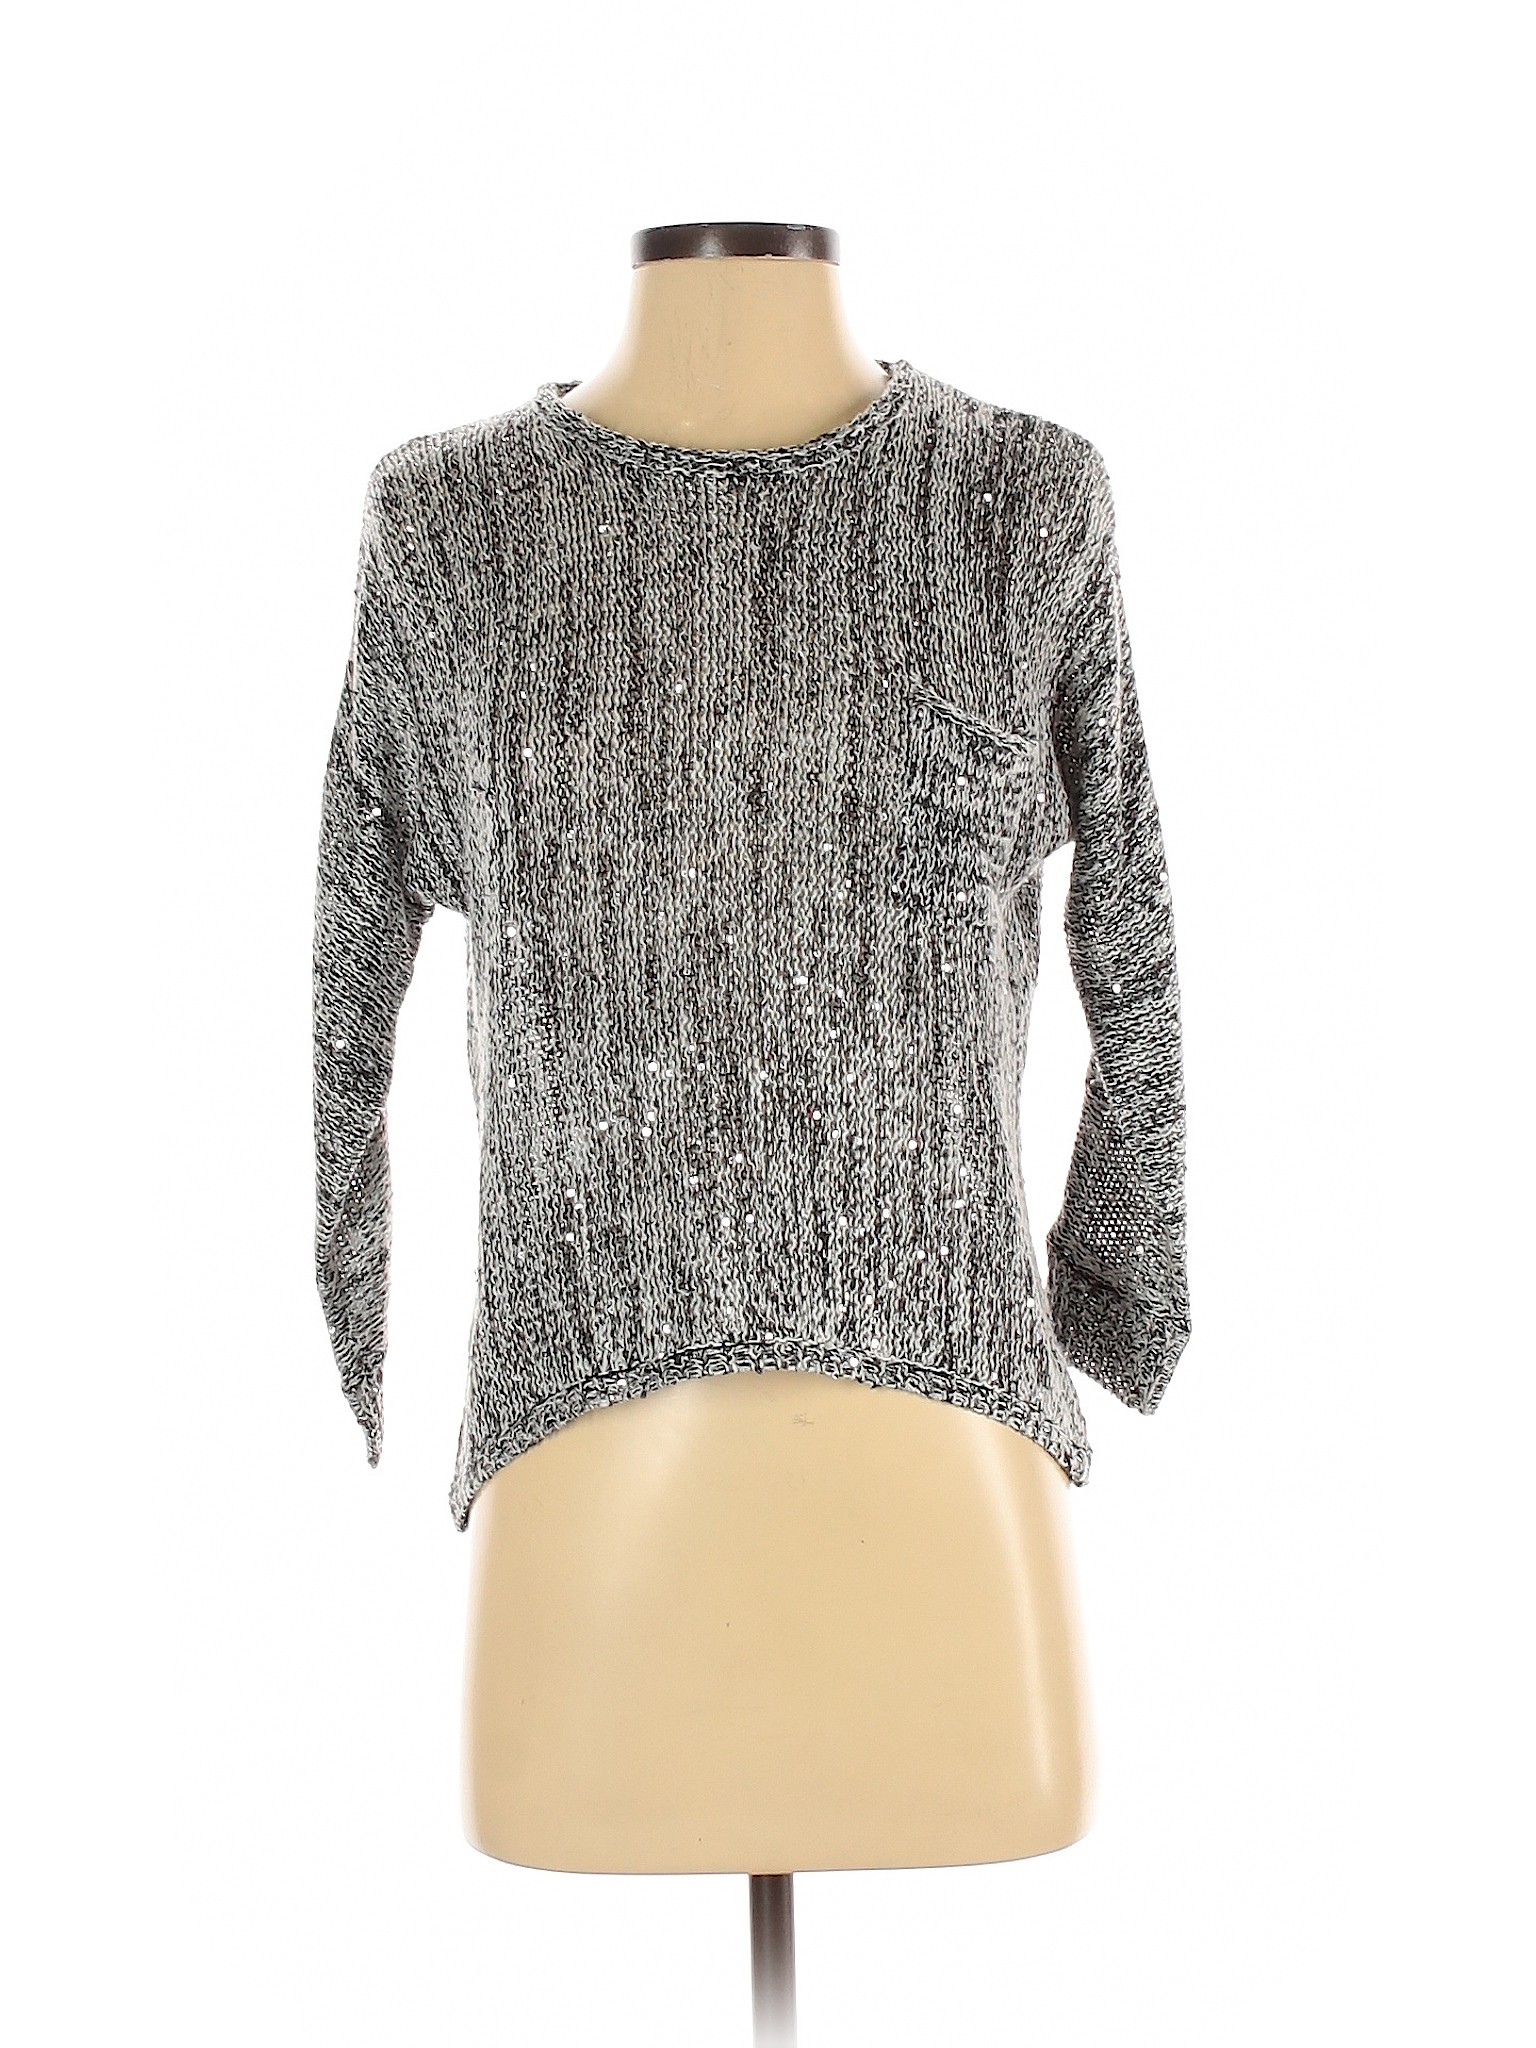 Assorted Brands Women Silver Pullover Sweater S | eBay